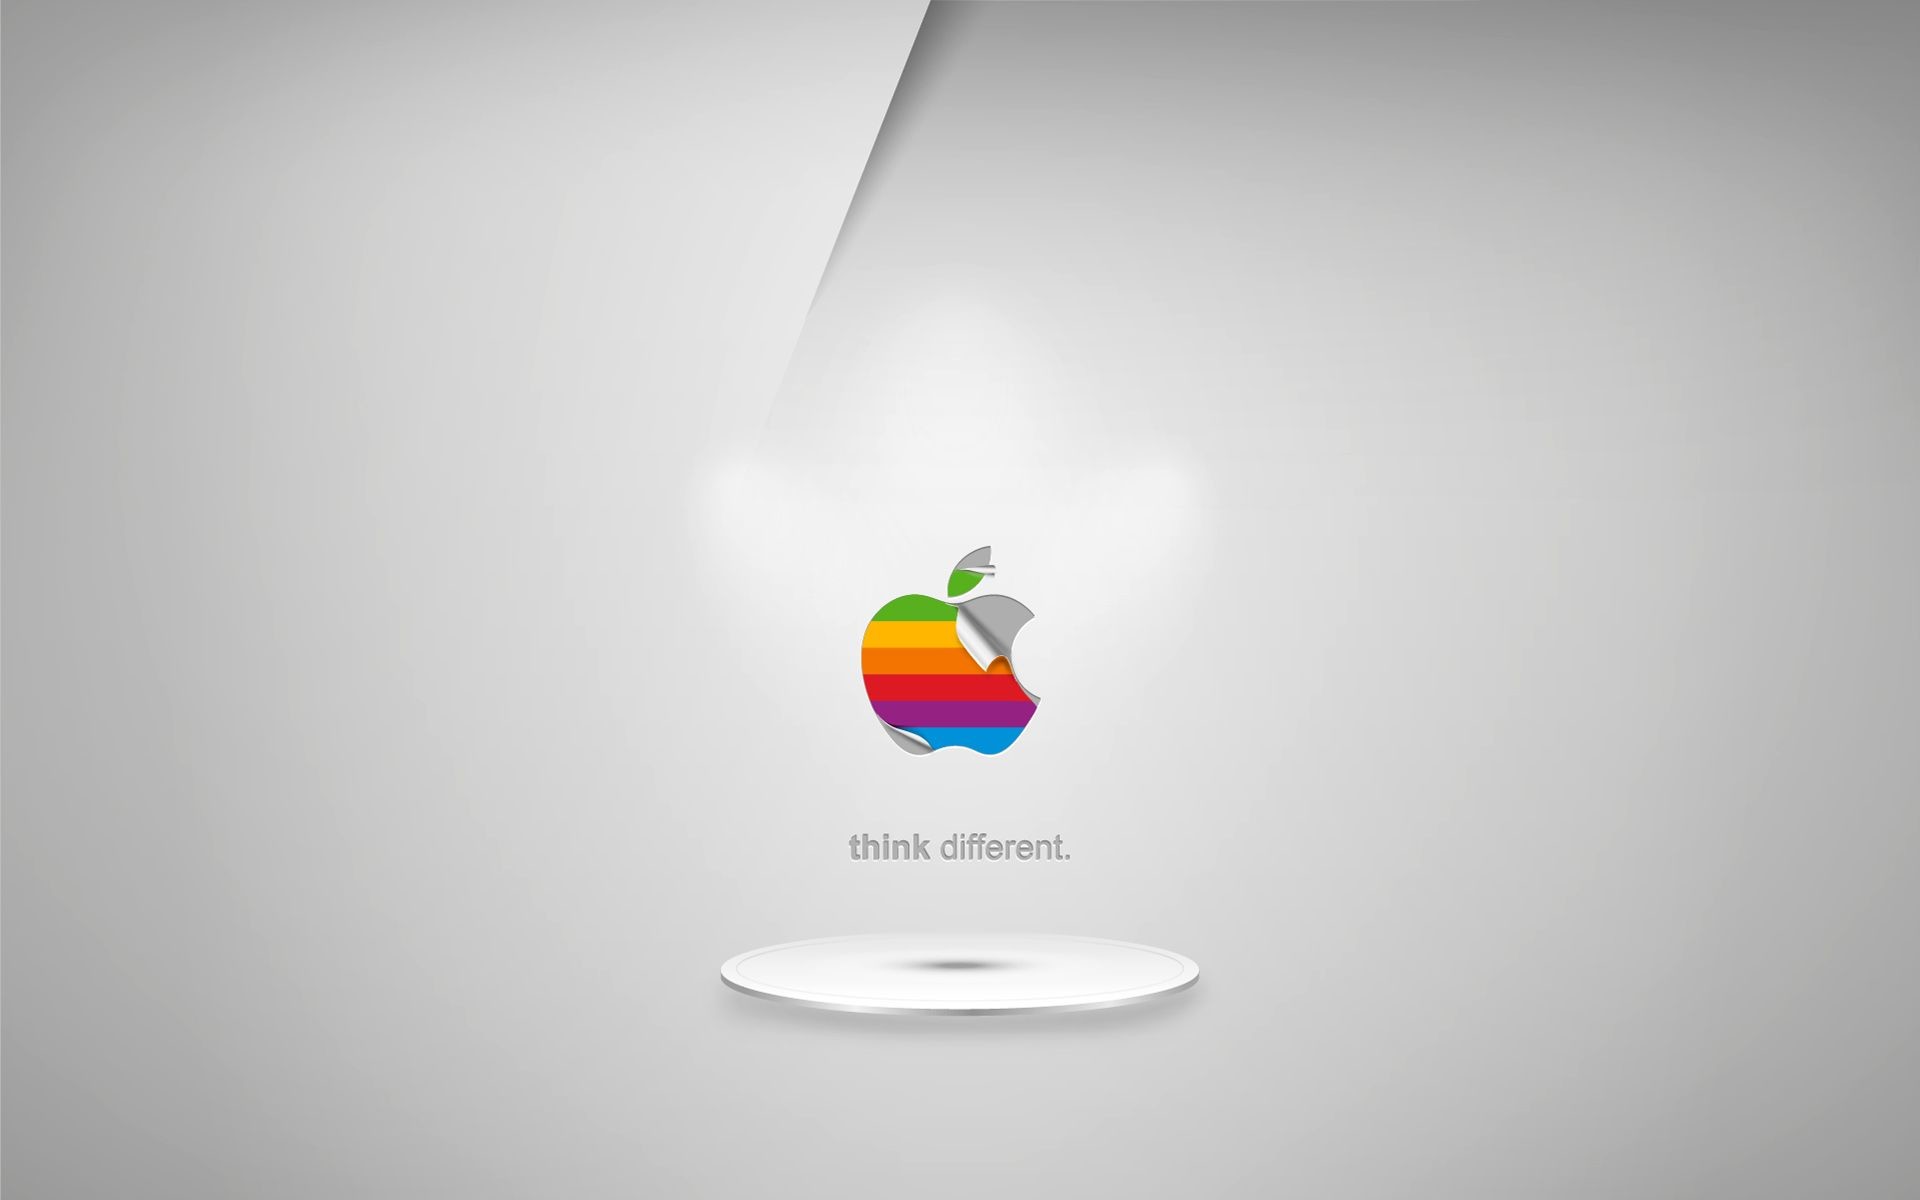 1920x1200 Steve Jobs Think Different Apple Mac Desktop Wallpaper Apple